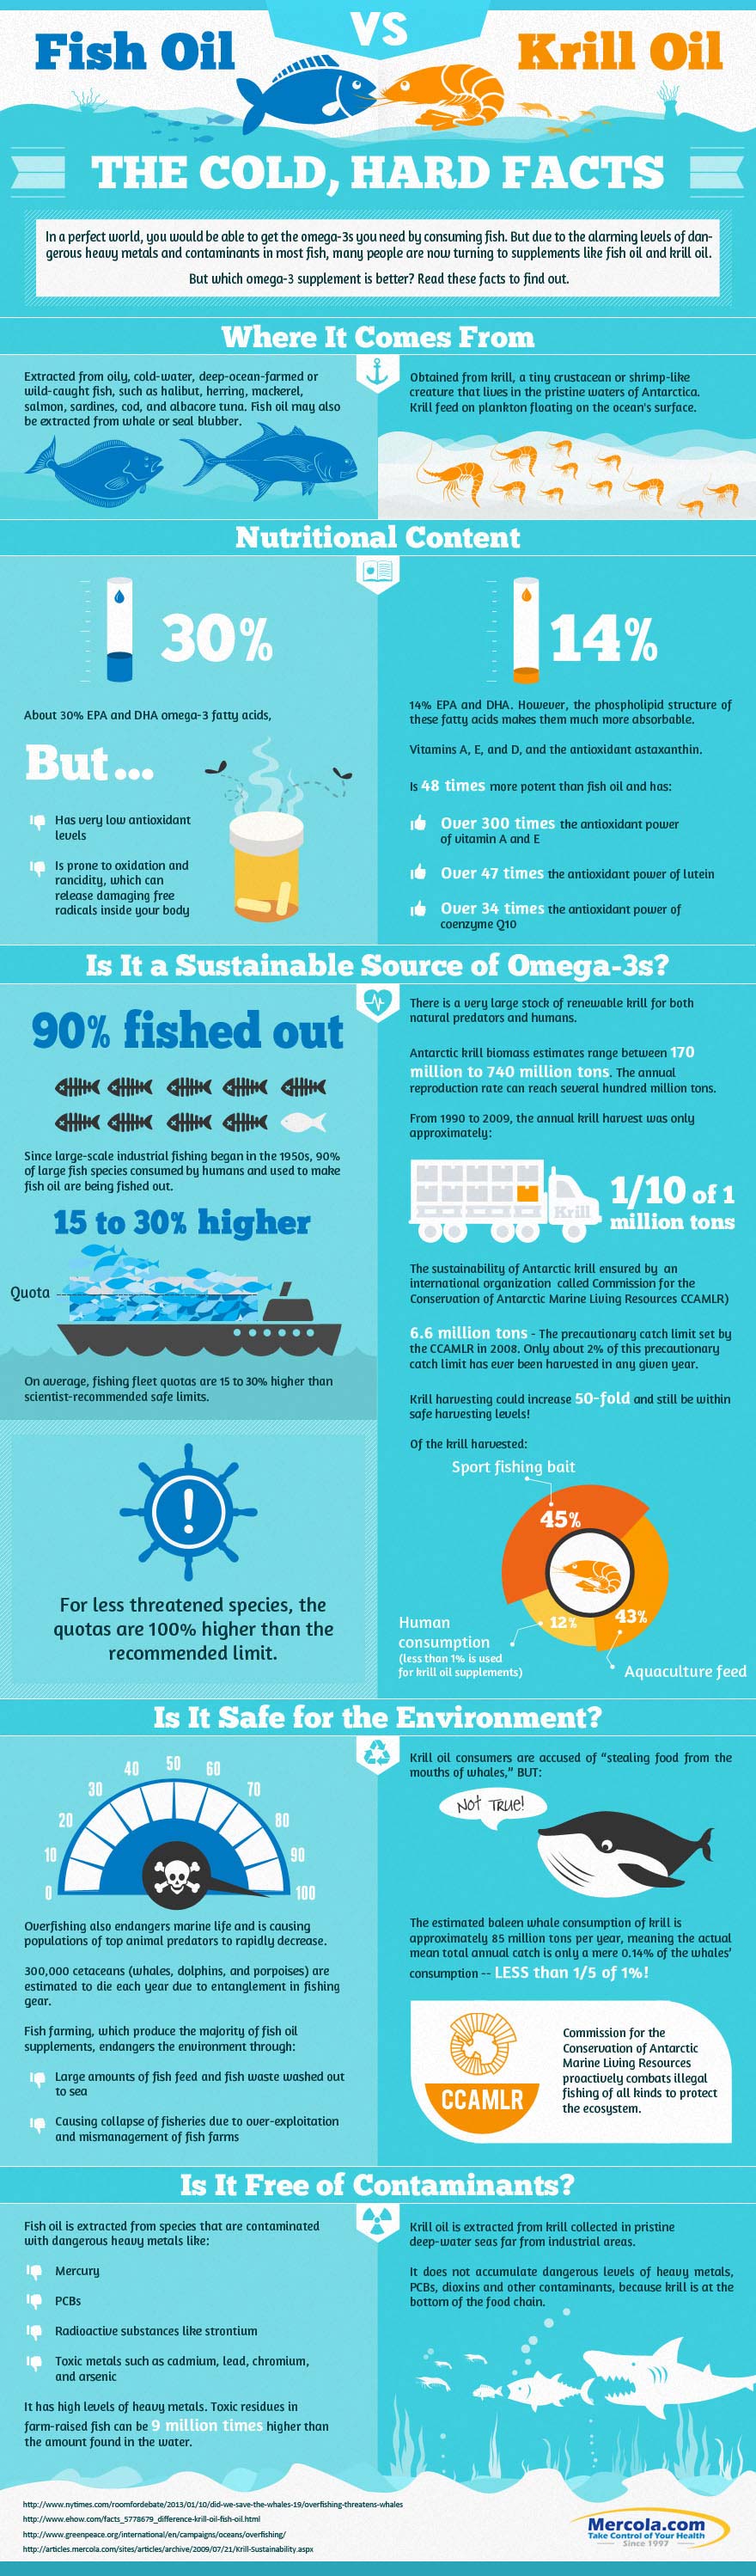 Krill Oil versus Fish Oil Infographic